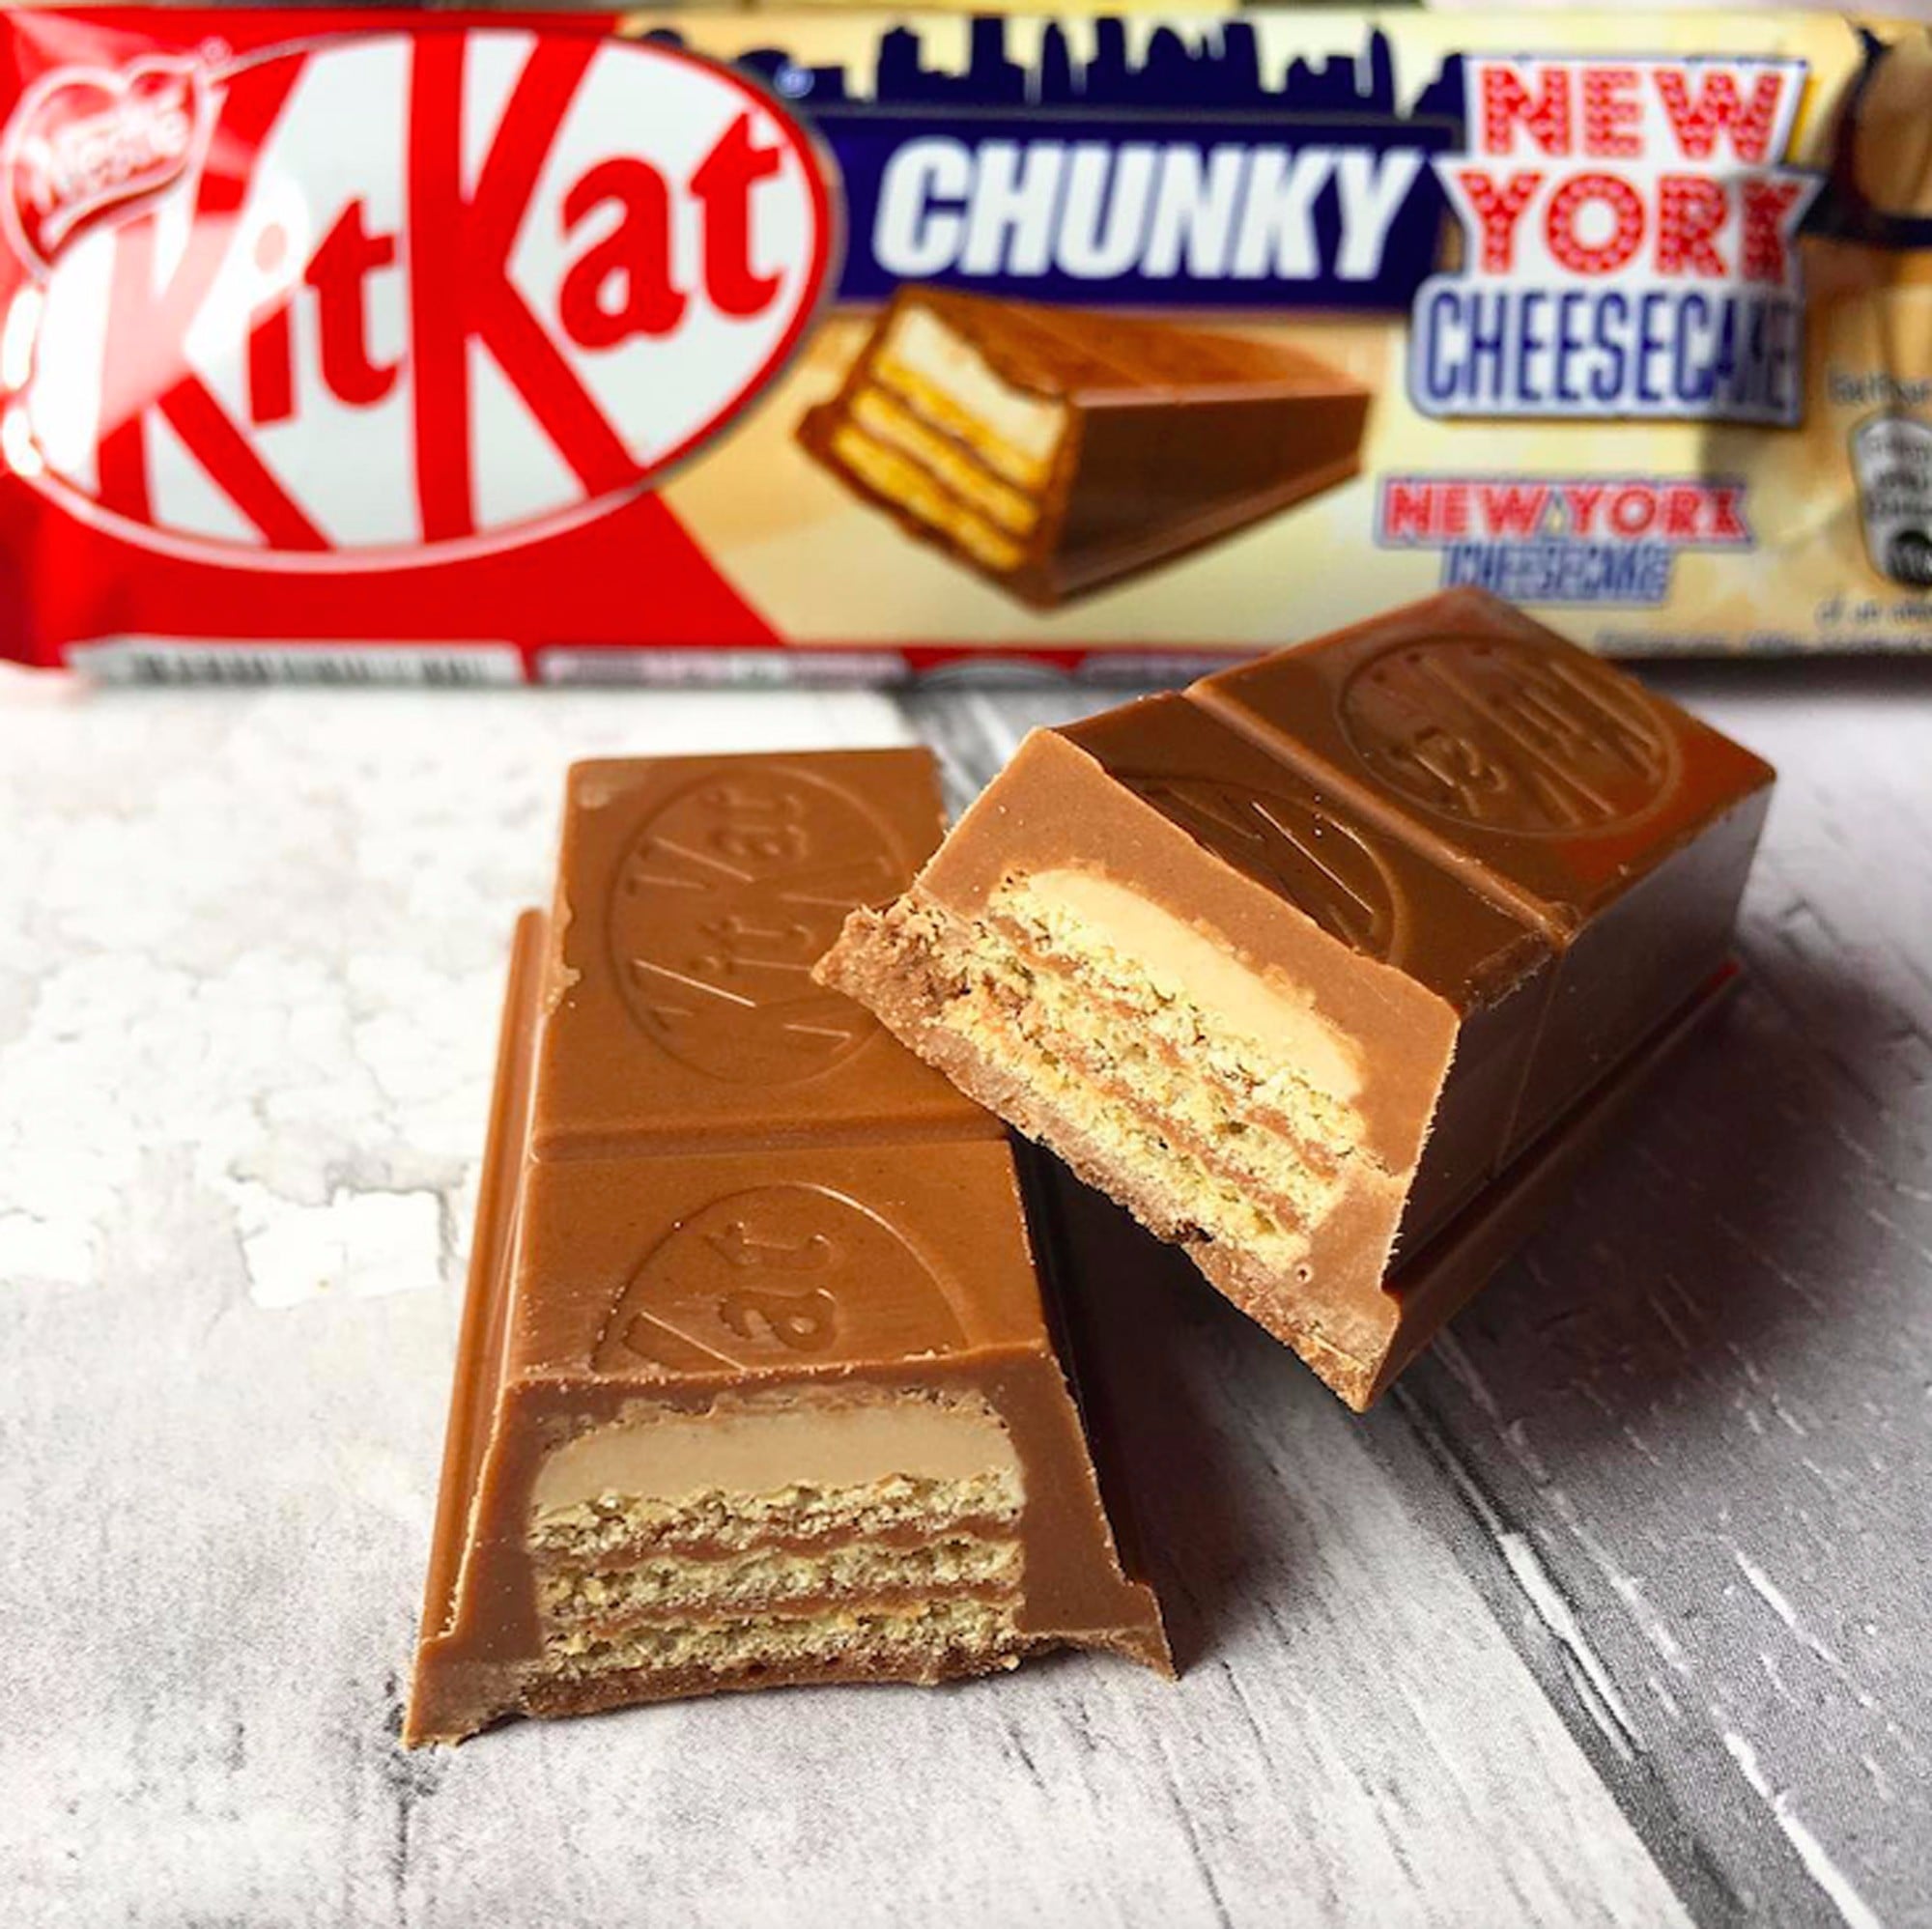 Super New York Cheesecake Kit Kat Chunky | POPSUGAR Food KC-95